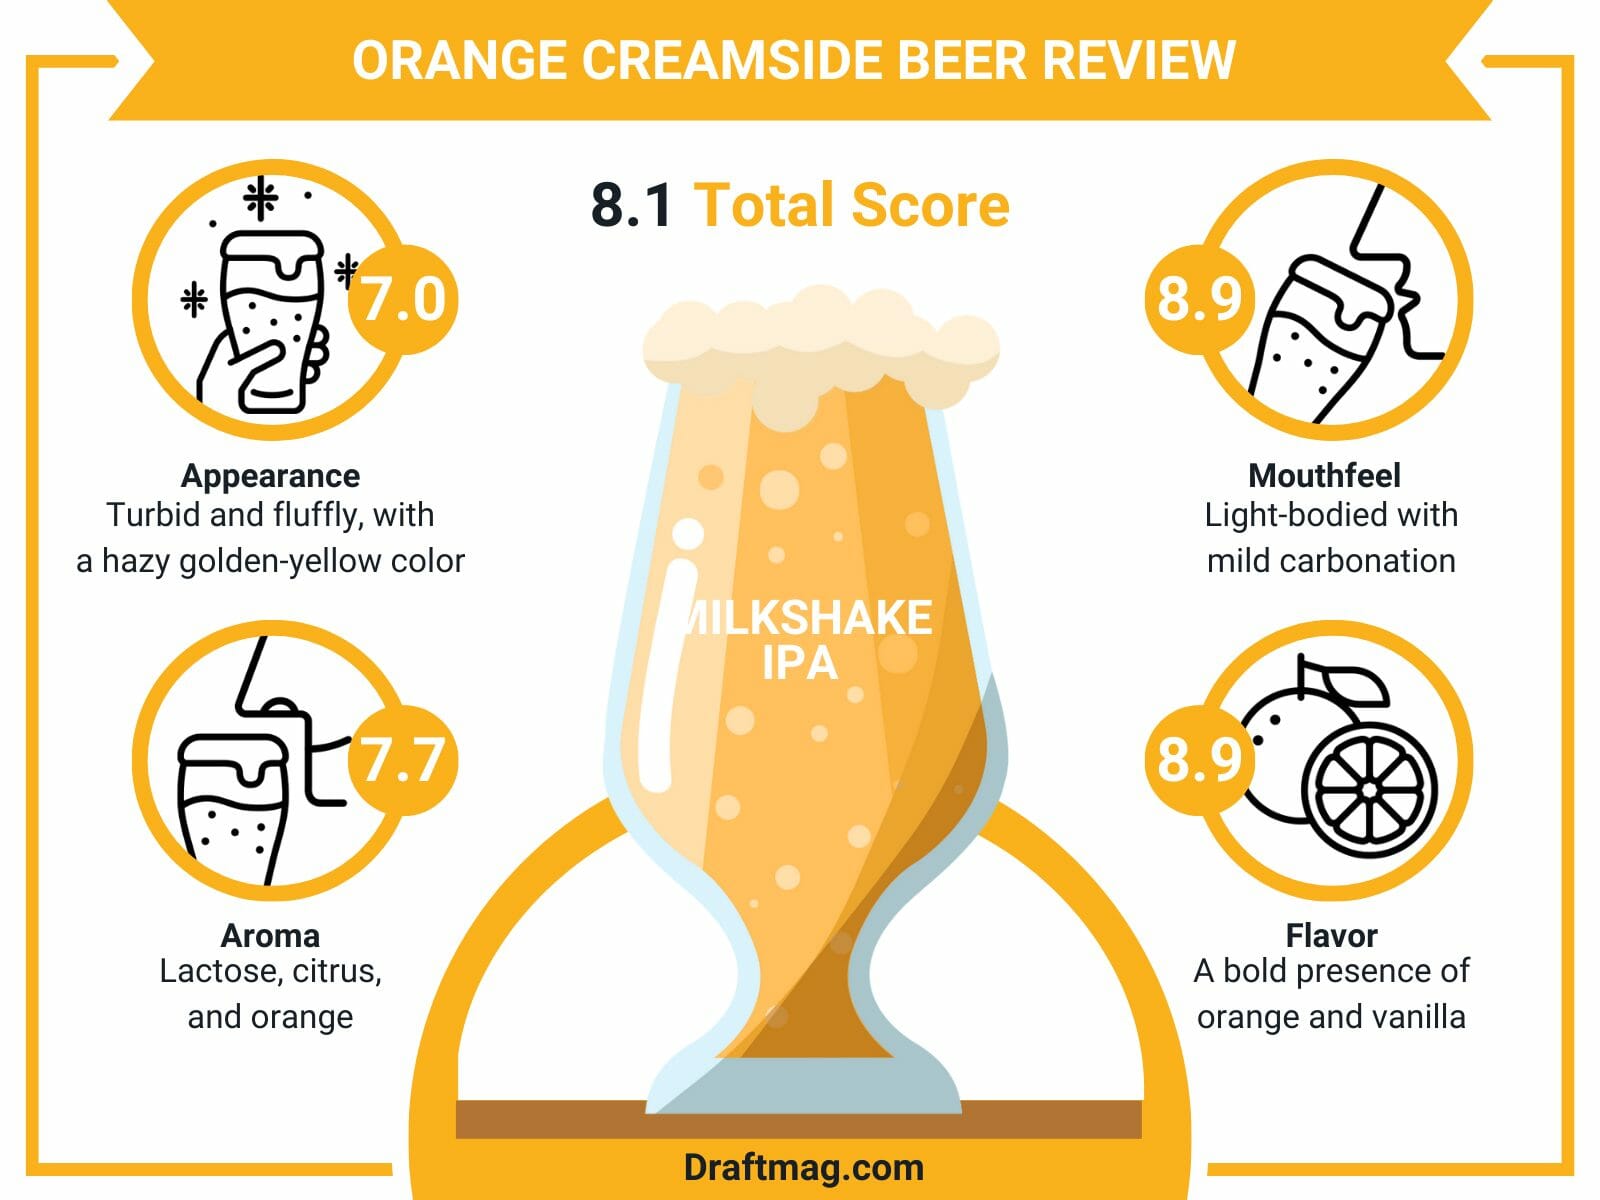 Orange creamside beer review infographic